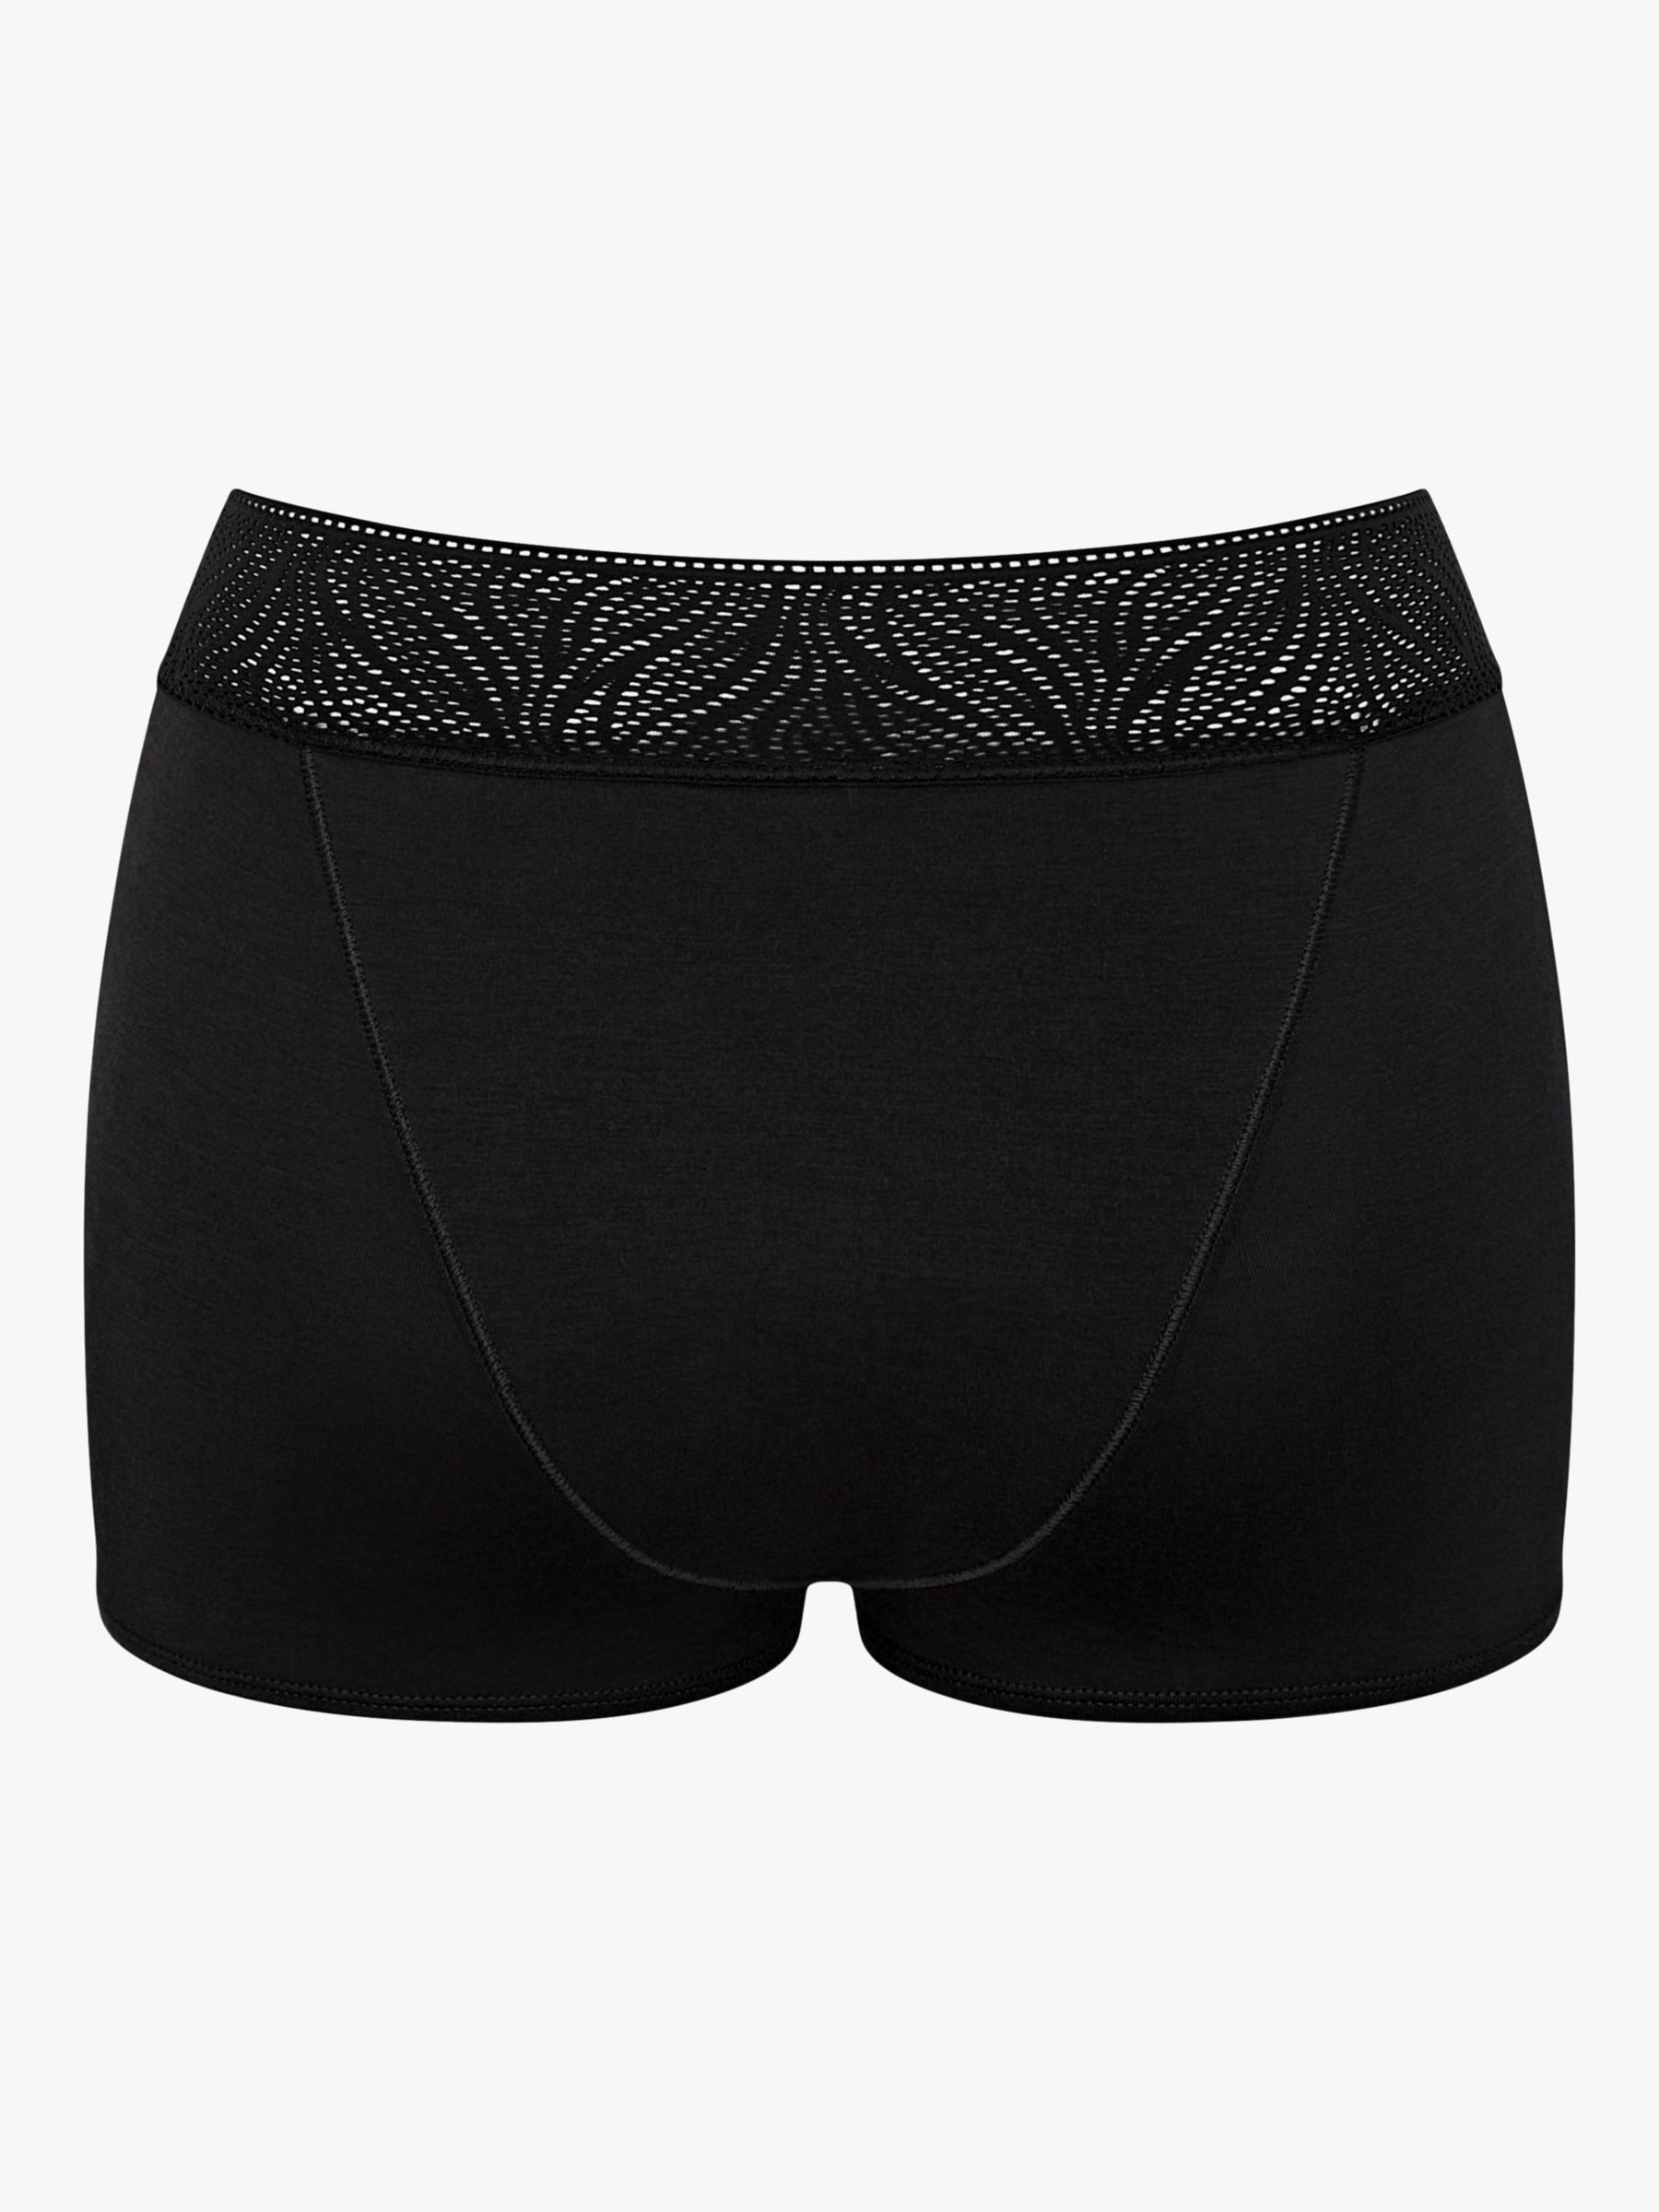 sloggi Medium Absorbency Shorts Period Knickers, Pack of 2, Black, L